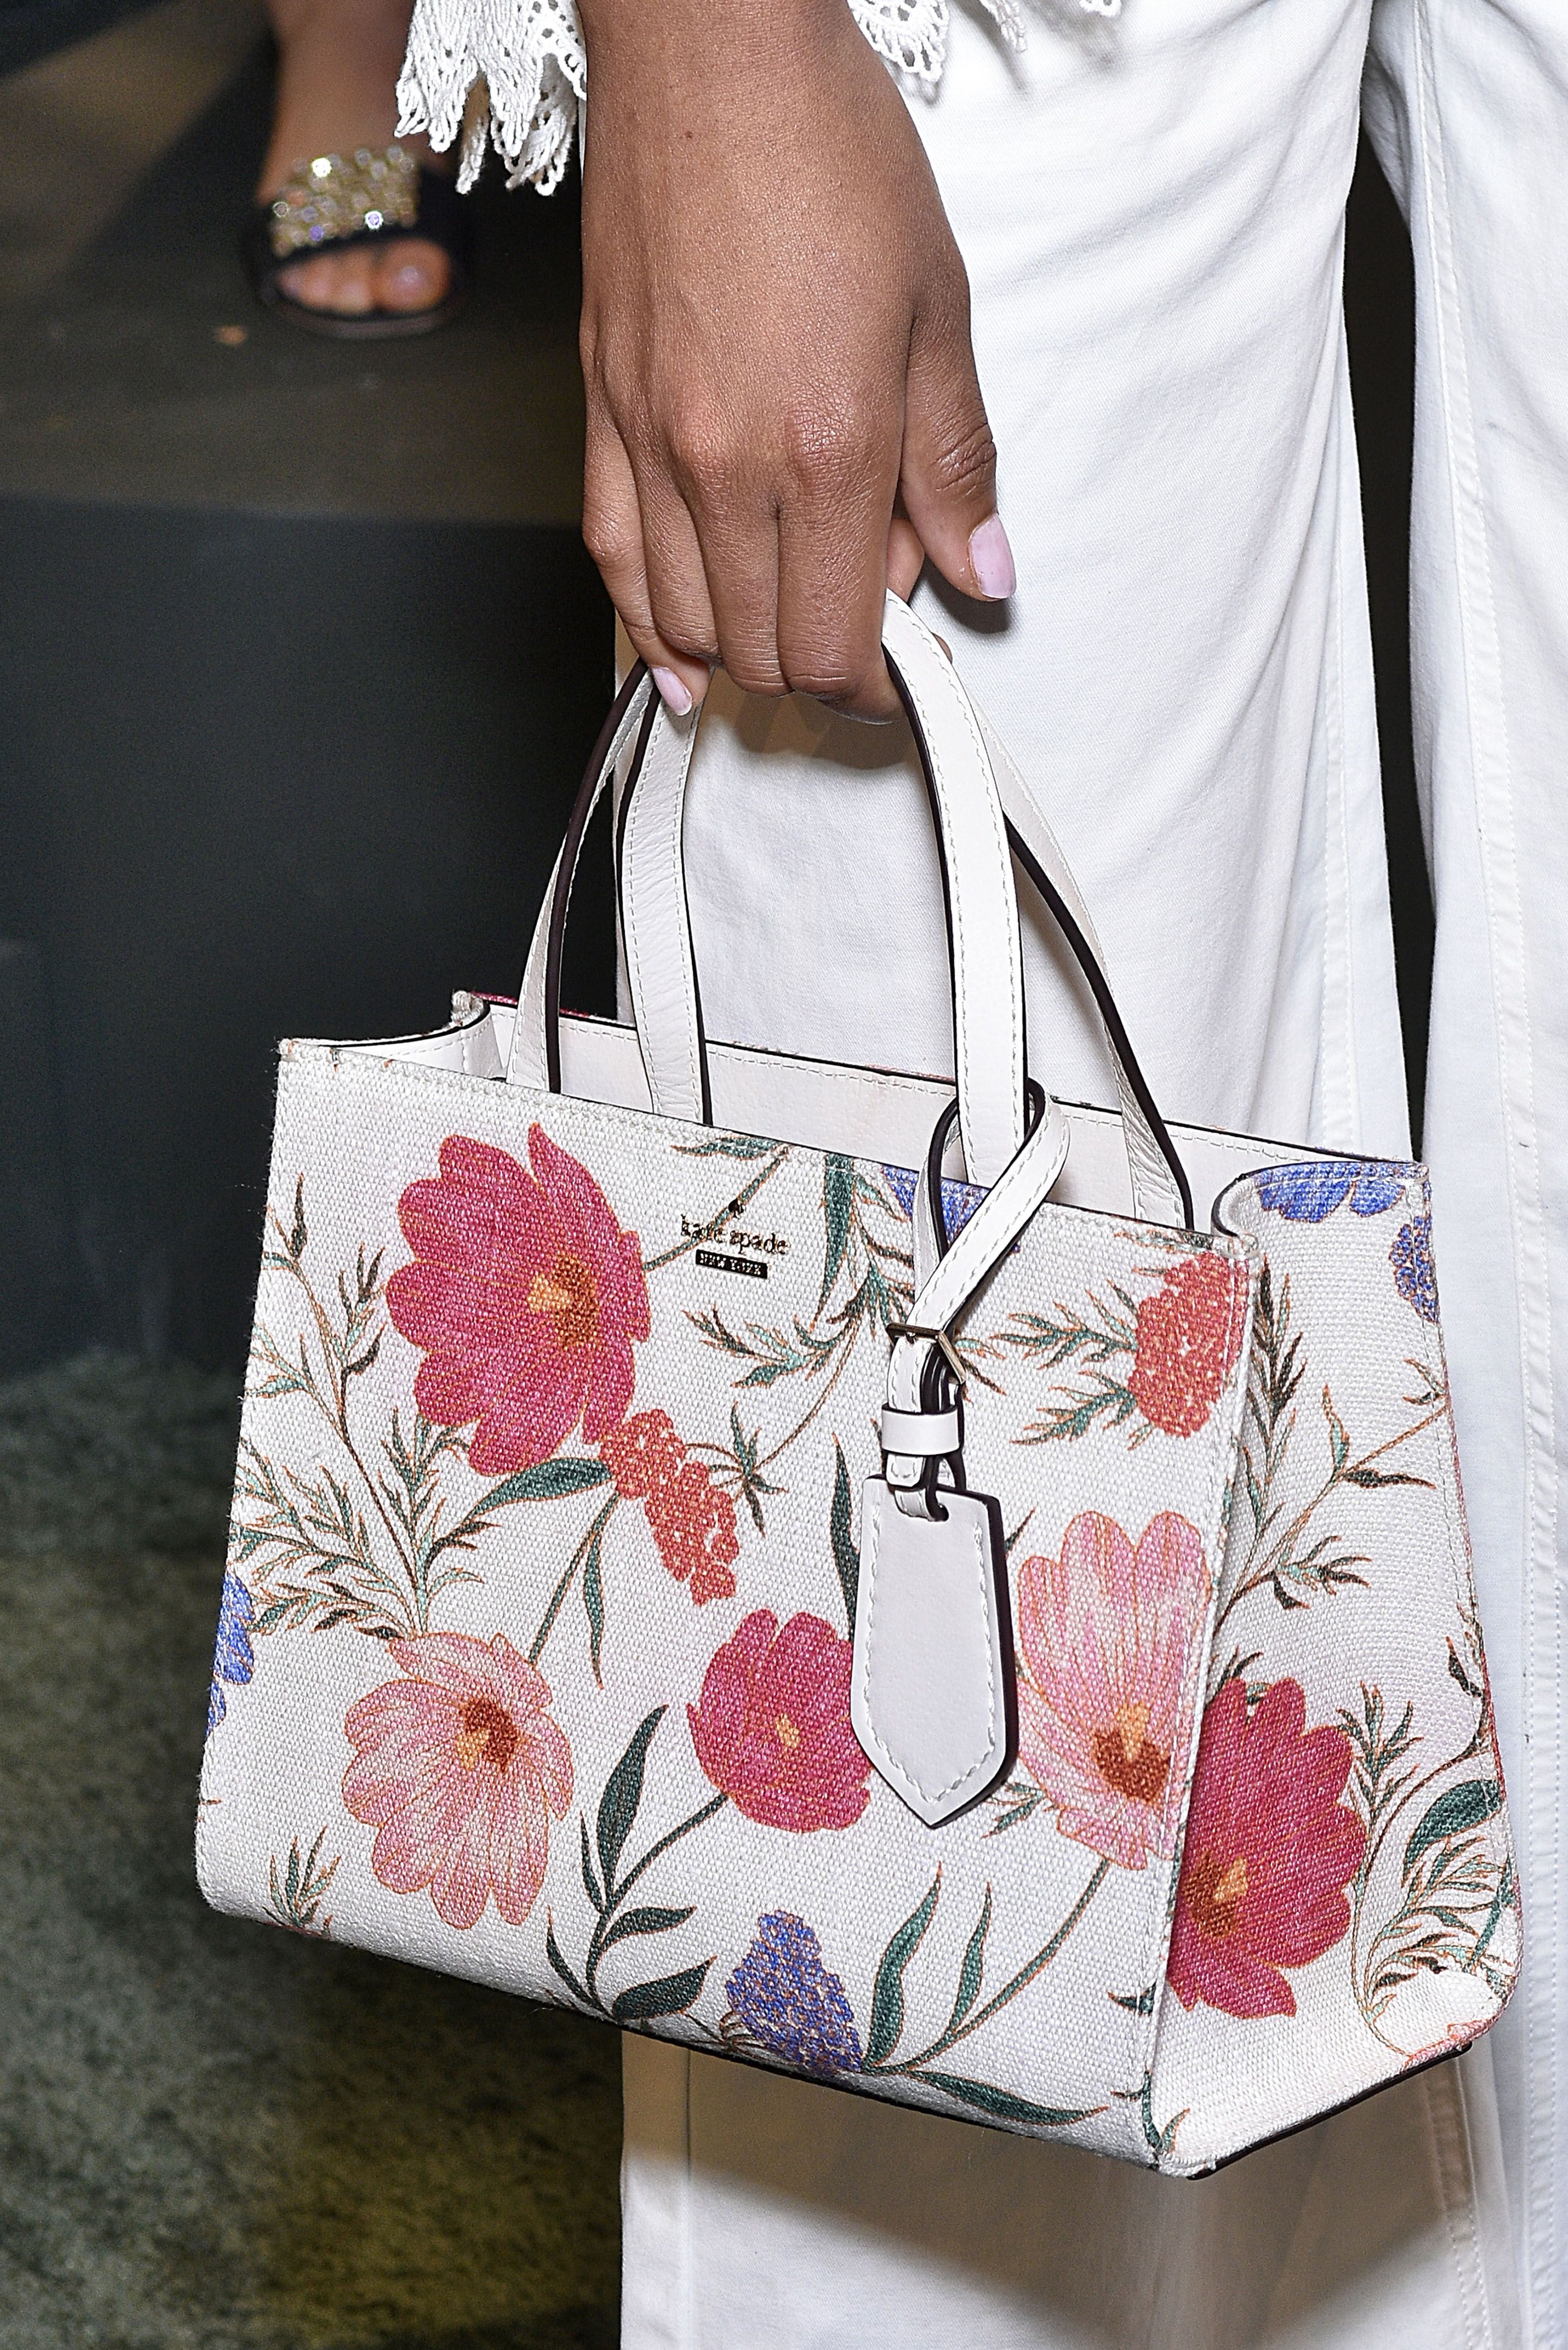 Pink Floral Casual Tote Bag Top Handles Shoulder Bag With Multiple Pocket For Woman